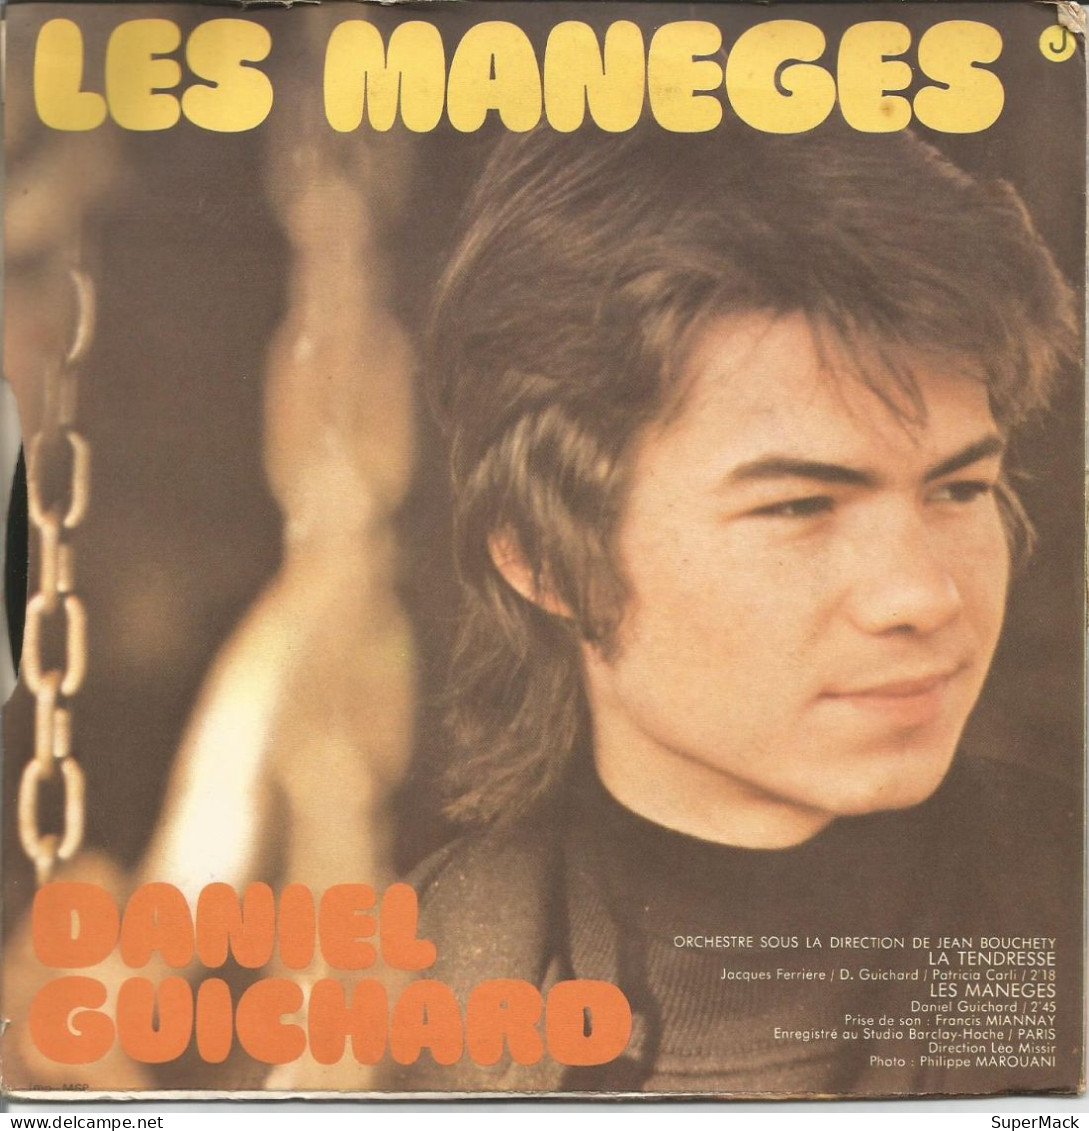 45T Daniel Guichard - La Tendresse - Barclay - 61.533 - France - 1972 - Collector's Editions